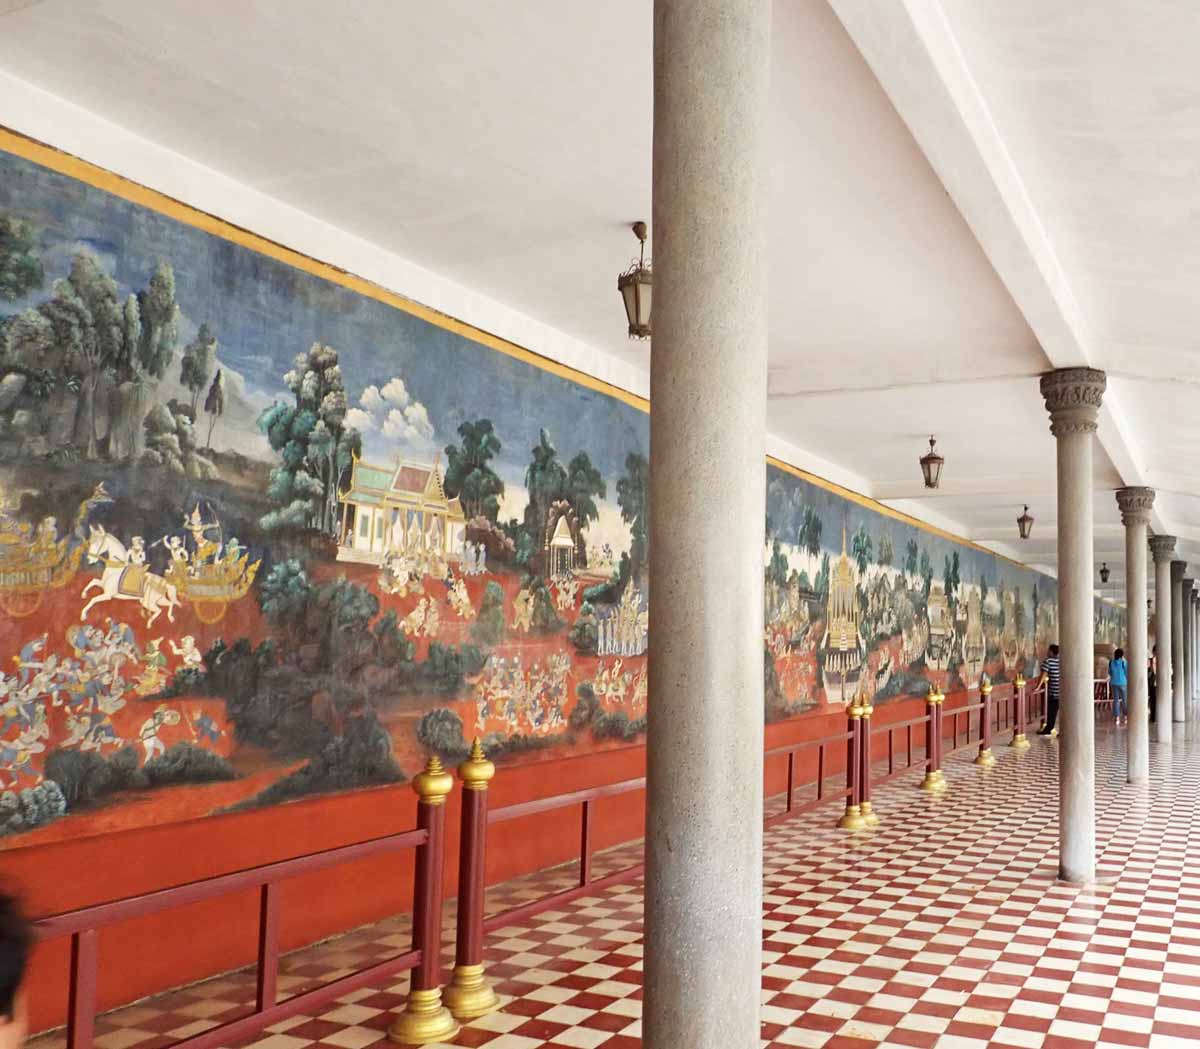 Silver Pagodaのまわりにはカンボジアの歴史を描いた壁画がぐるっと続いている